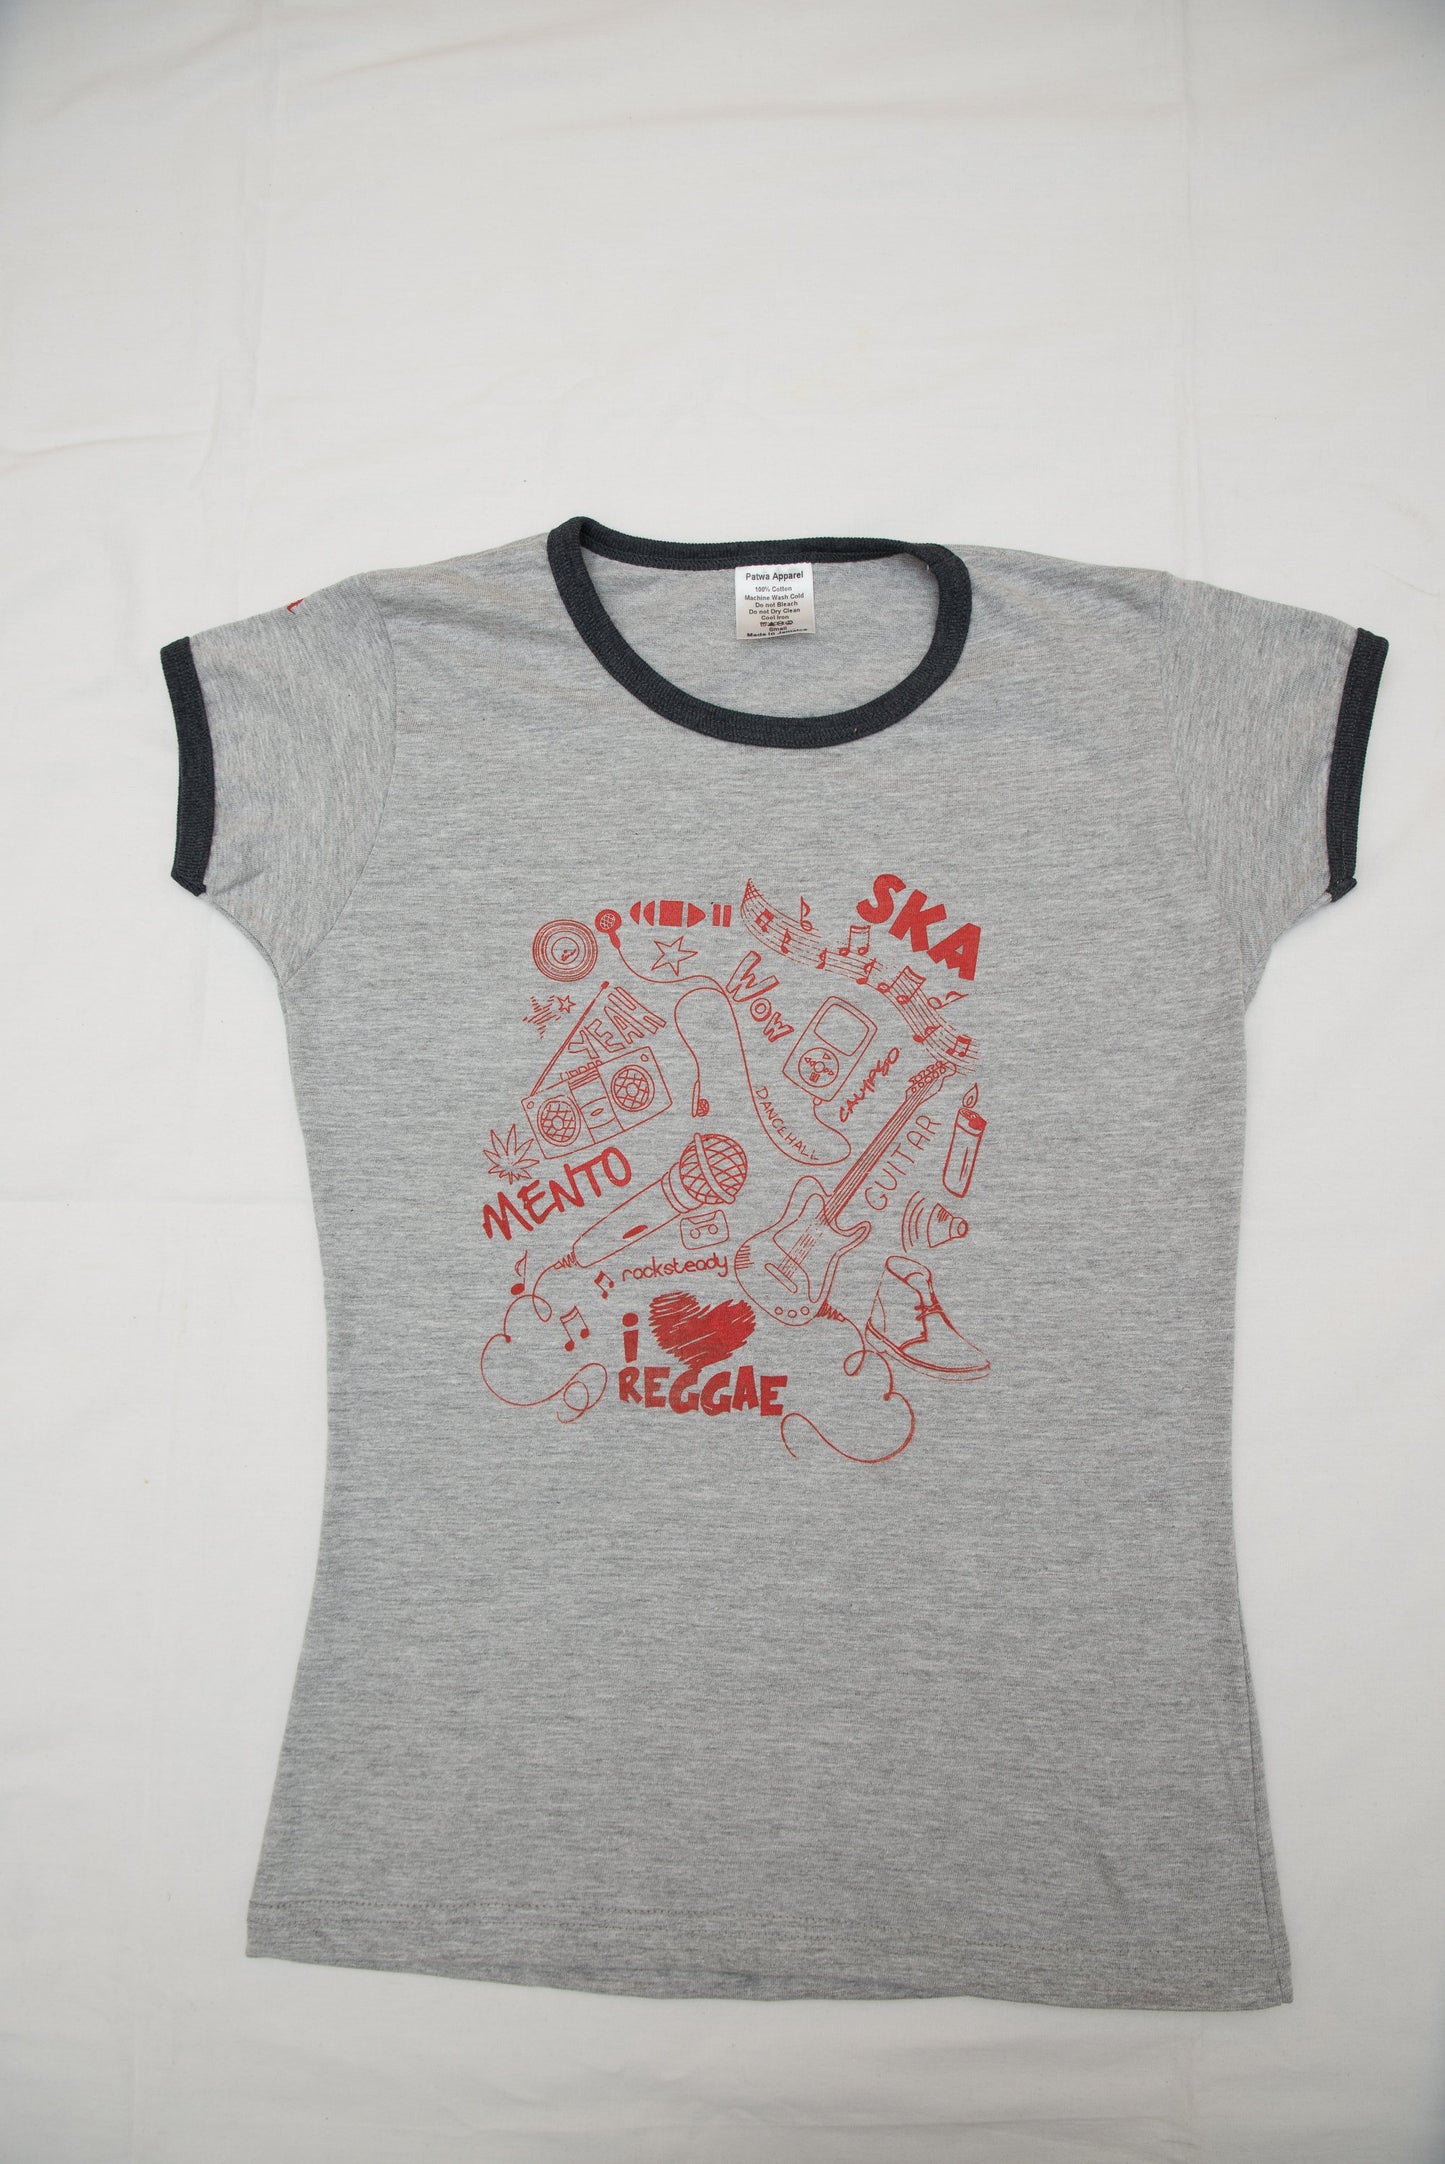 A t-shirt with the patois phrase Ska, Mento, Reggae